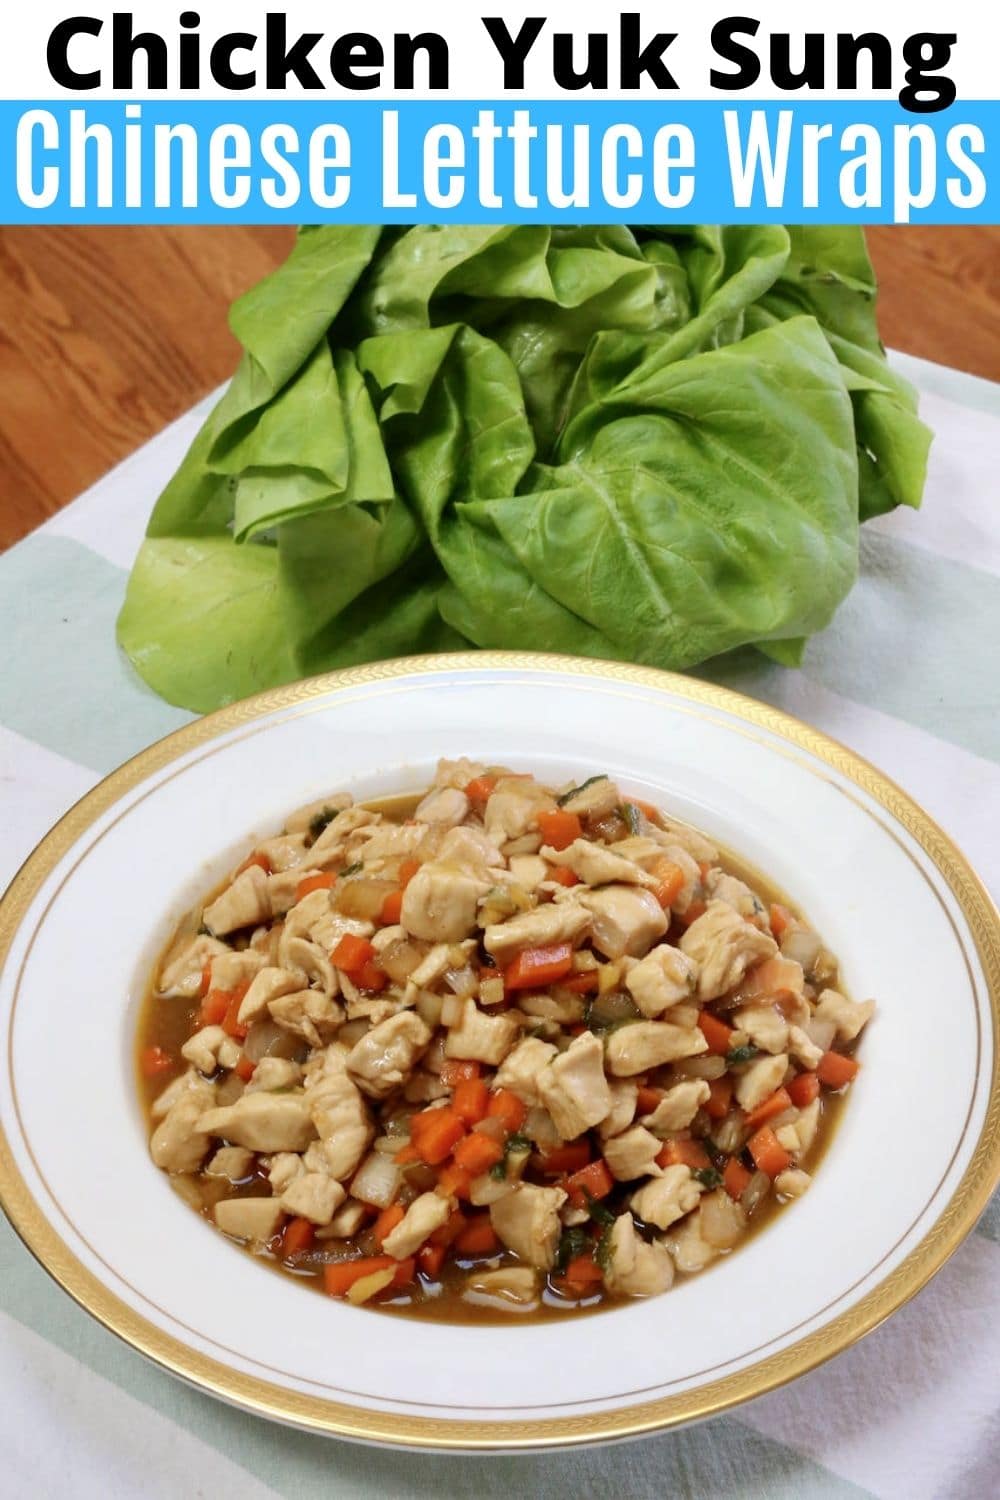 Chicken Yuk Sung Chinese Lettuce Wraps Recipe - dobbernationLOVES